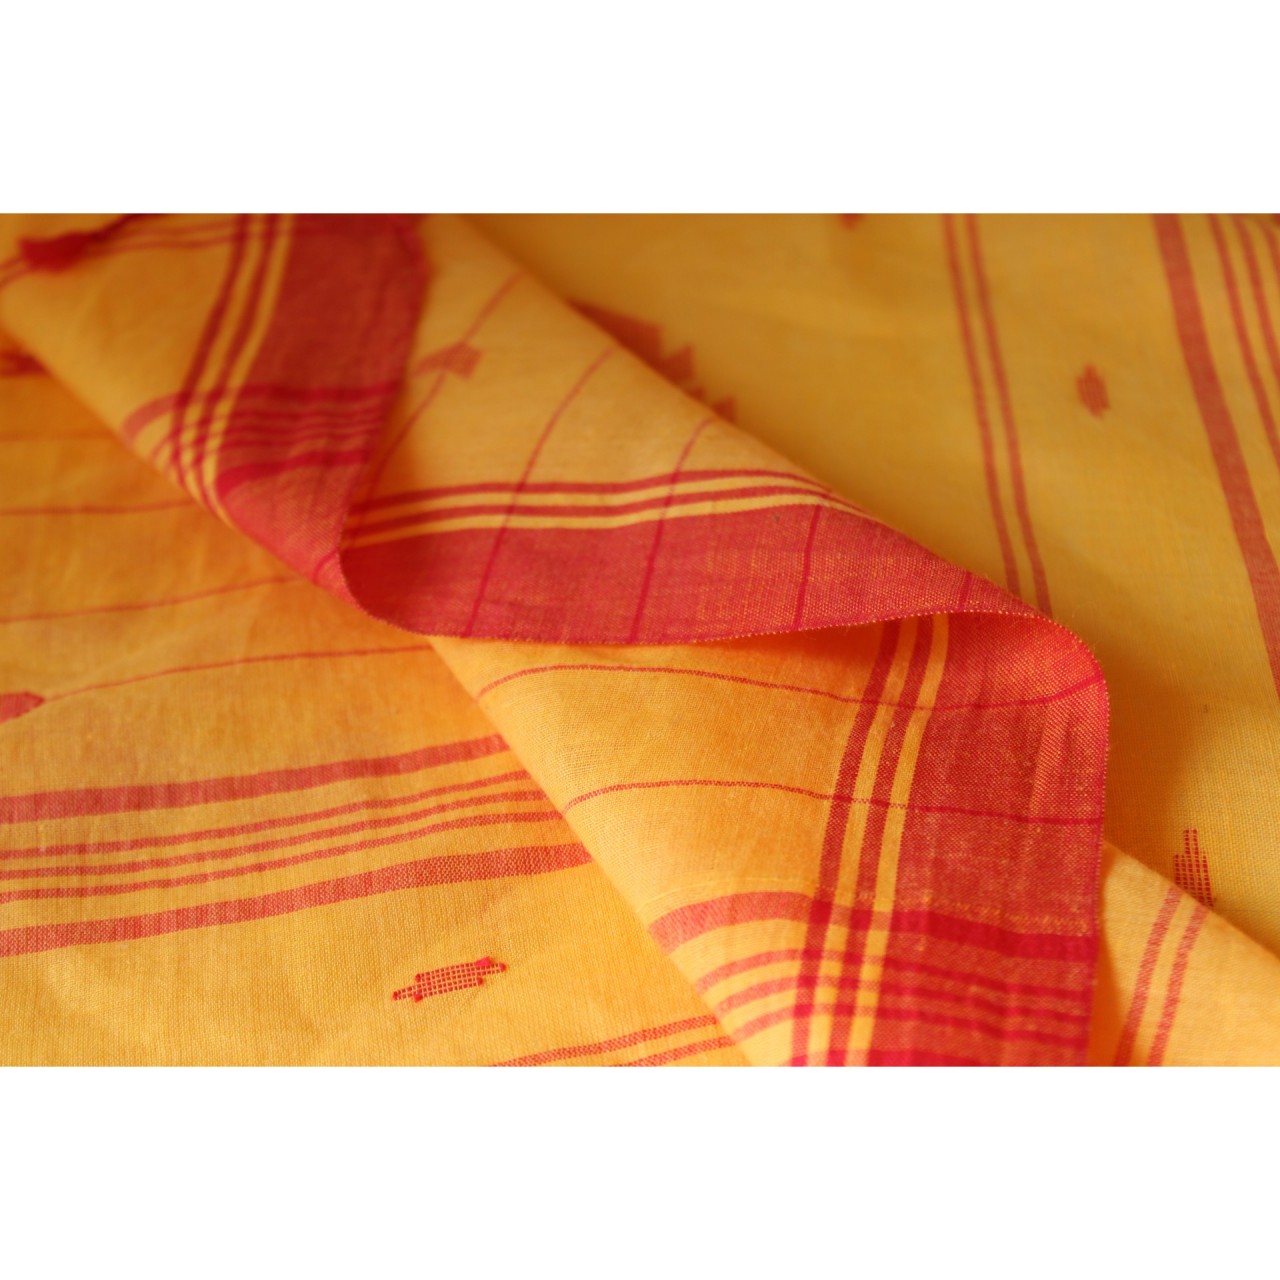 (1154) Cotton Azo-free dyed Jamdani sari from Burdwan with cotton motifs - Mustard yellow, red